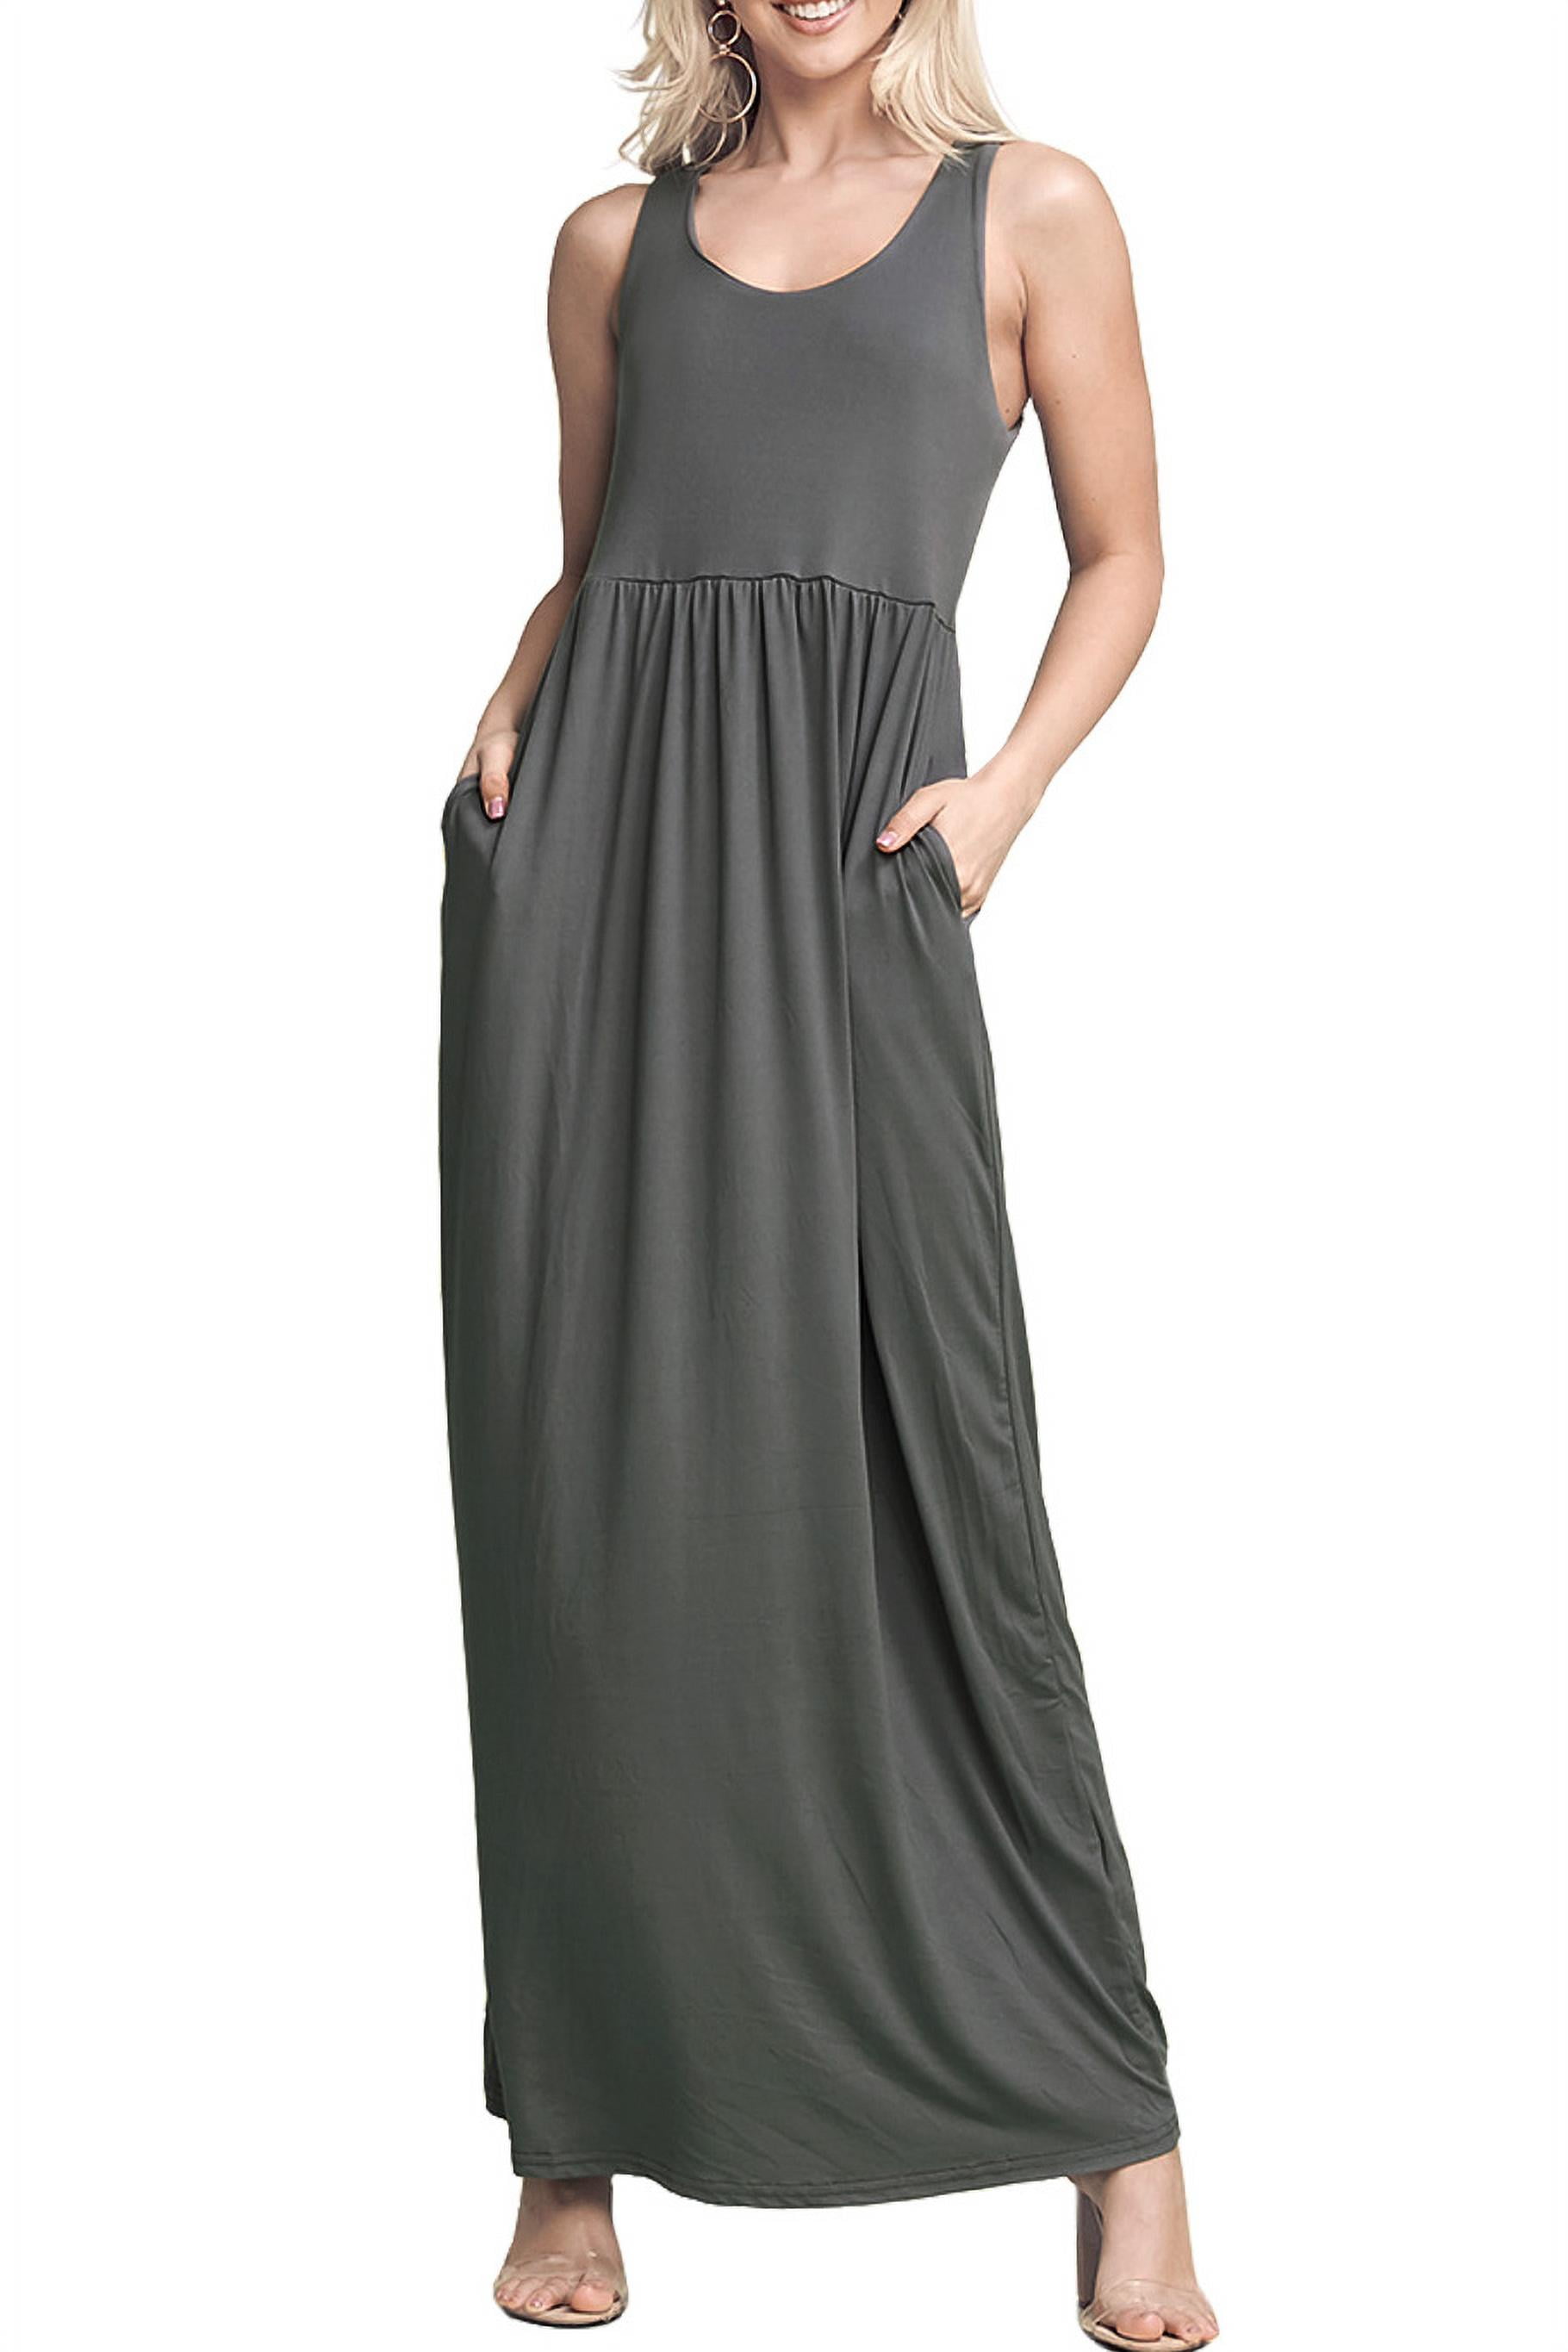 Doublju Women's Empire Seam Sleeveless Maxi Dress with Pockets (Plus Size Available)